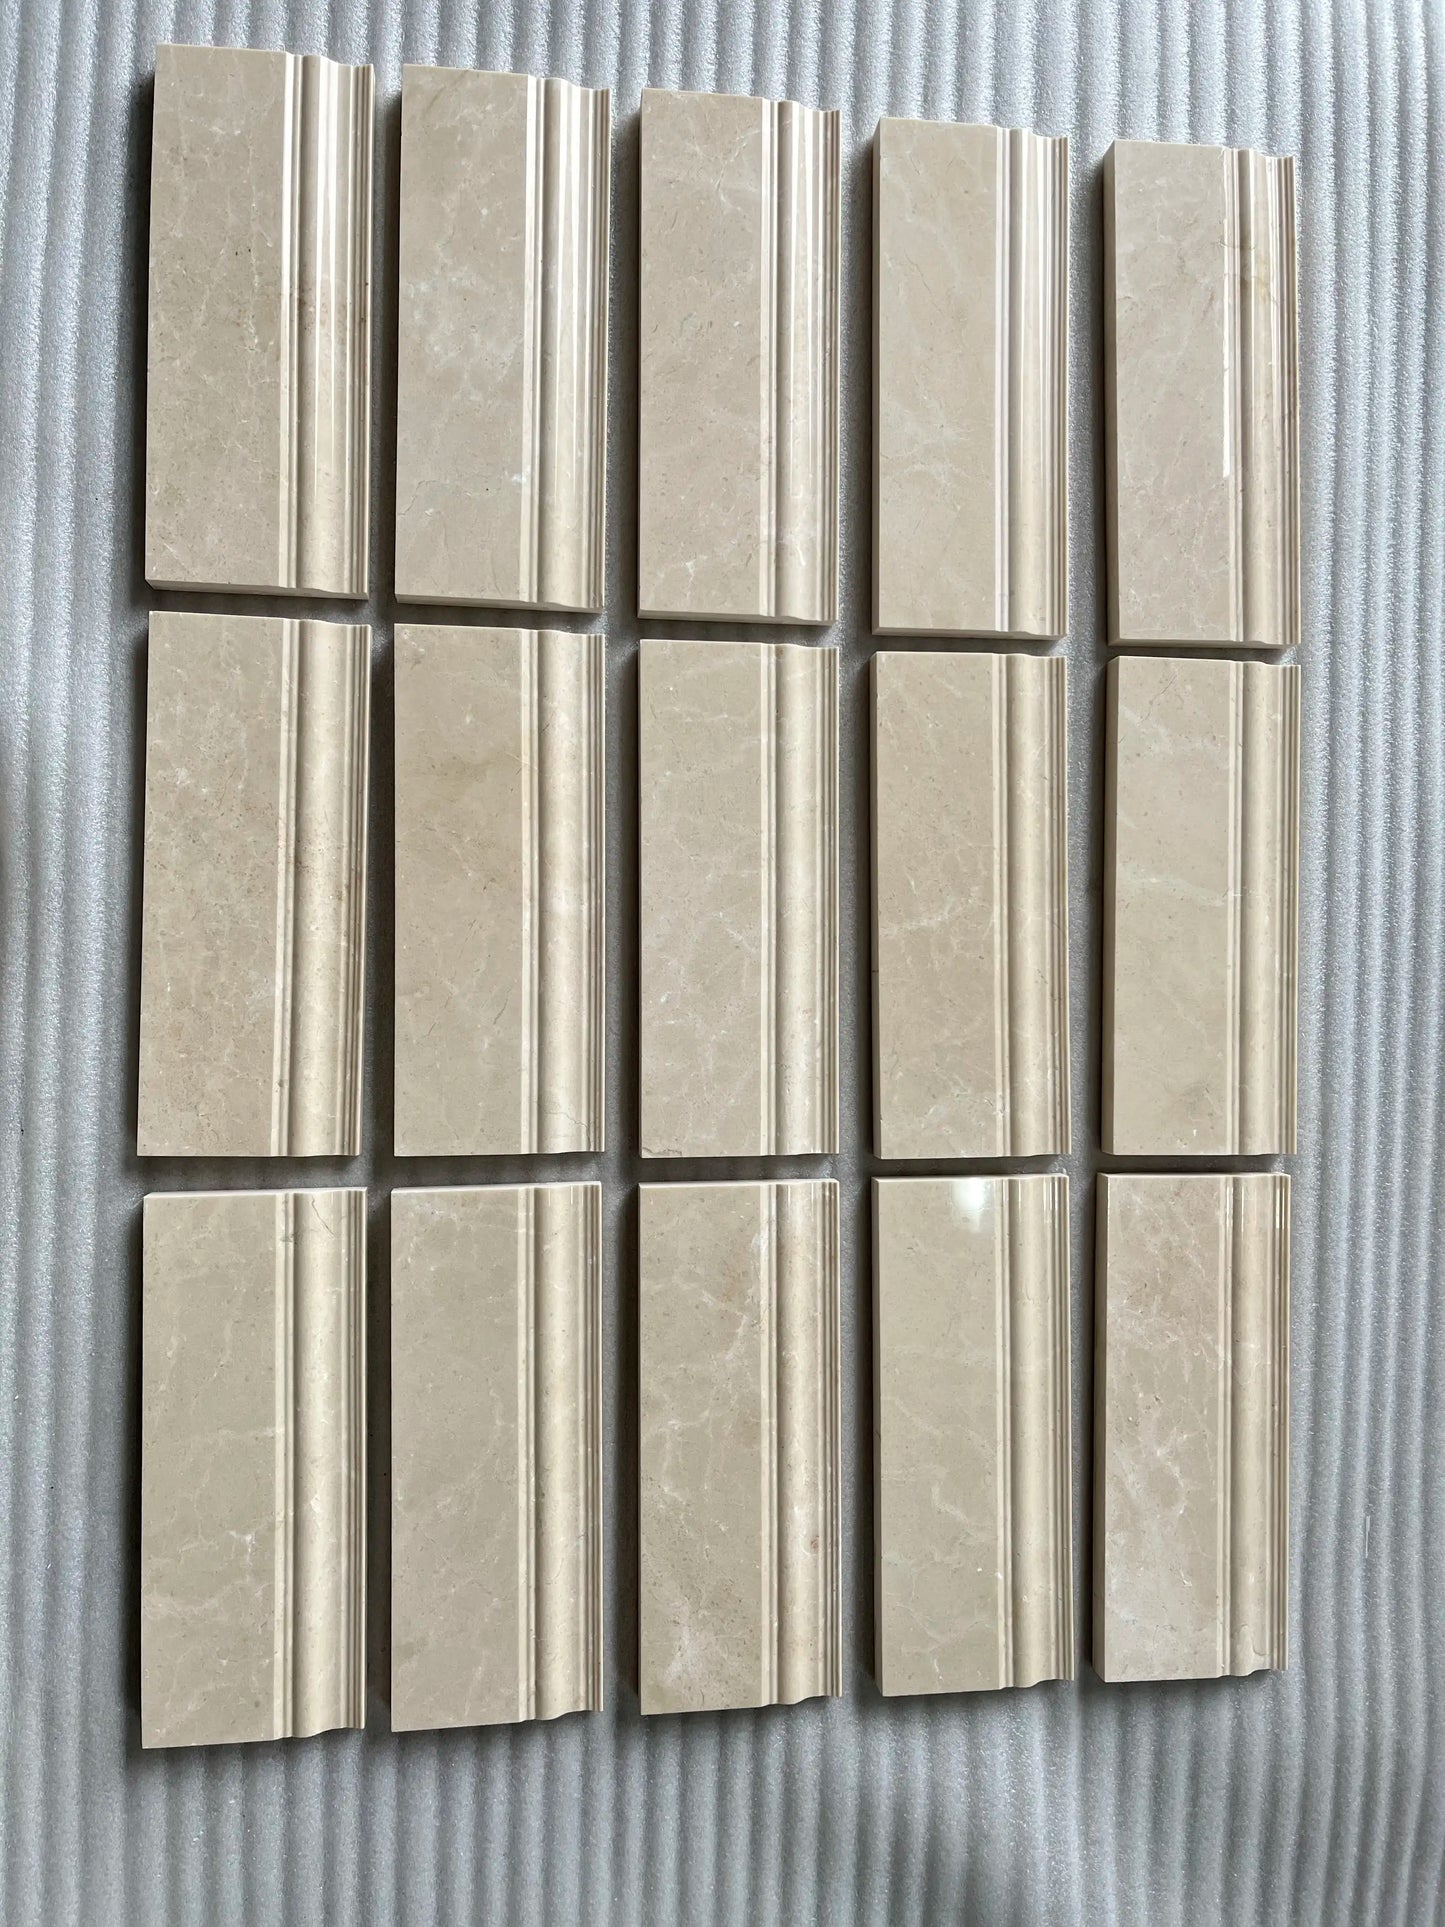 Crema Marfil Polished Baseboard Trim Tile 4 3/4x12"